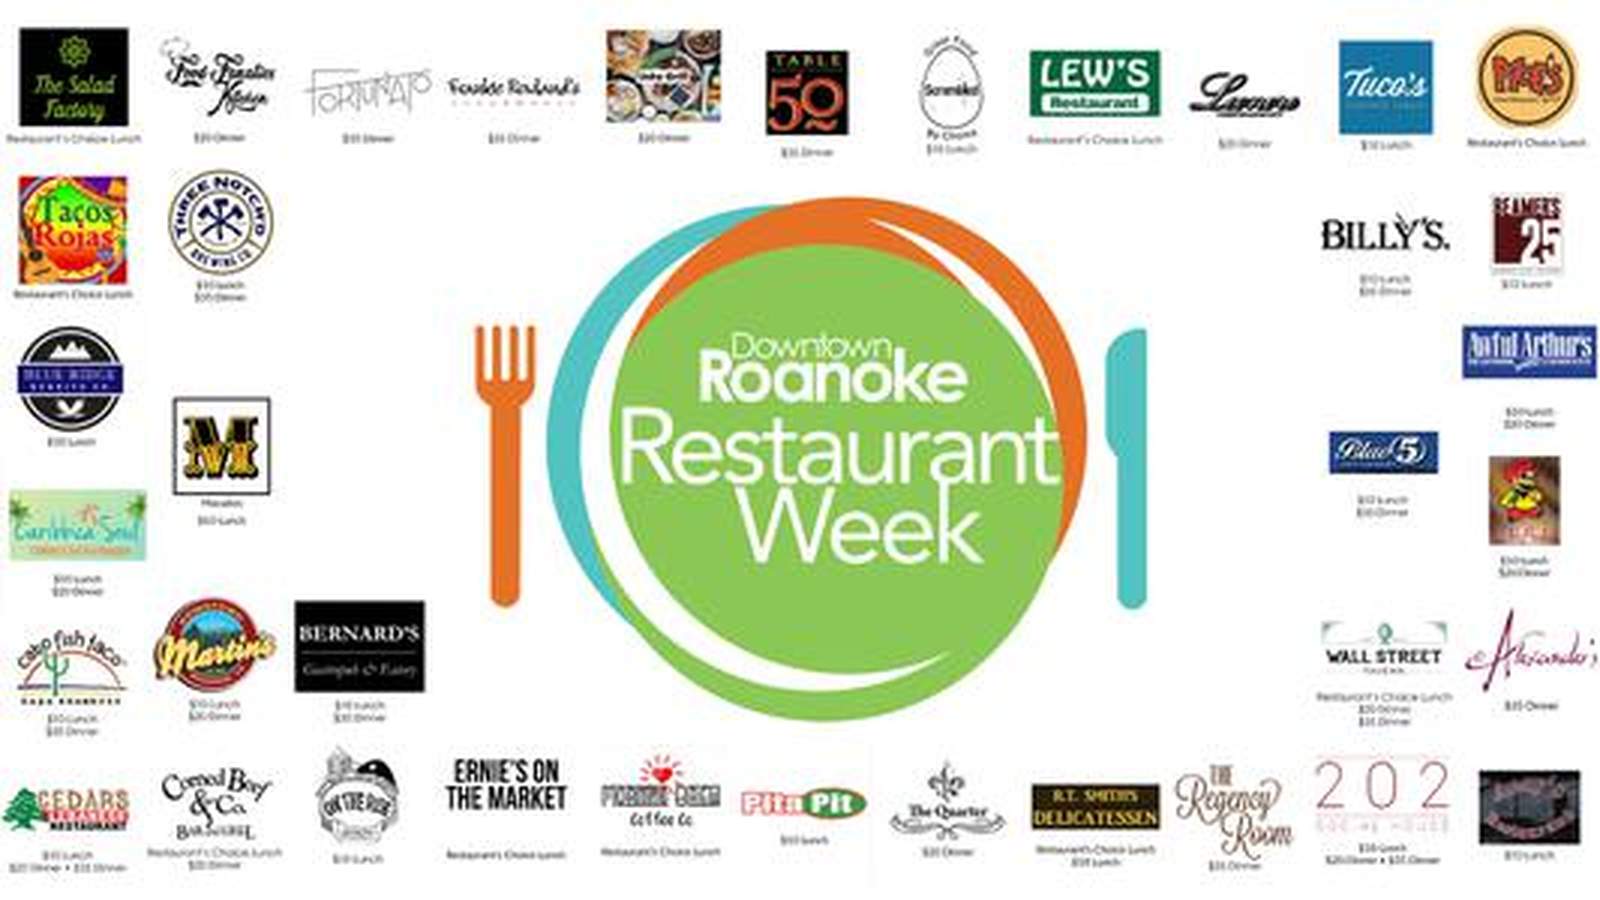 Downtown Roanoke Restaurant Week is underway